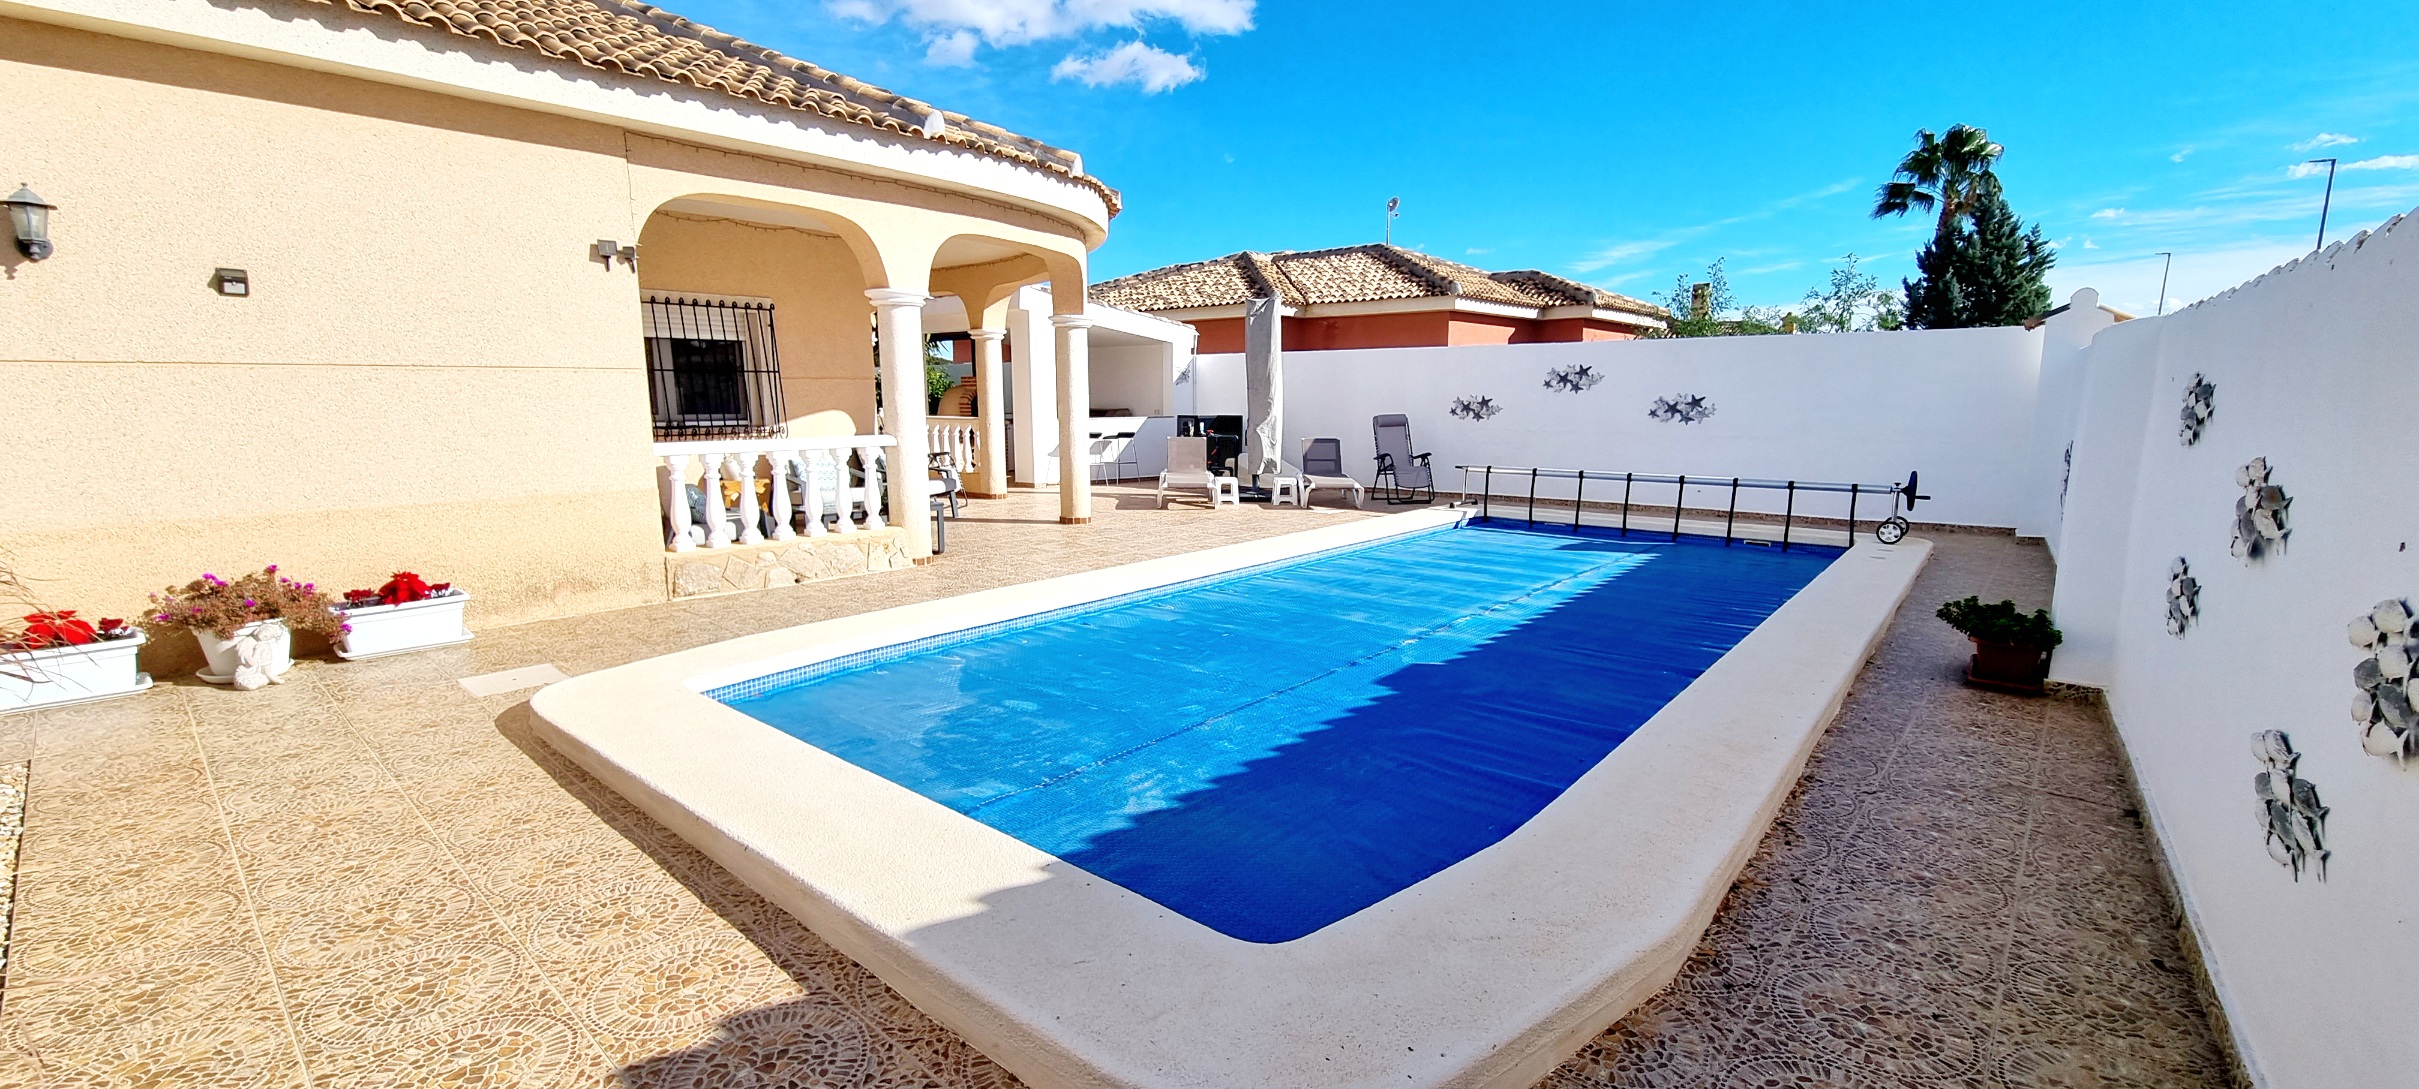 4 Bed 3 Bath Detached Villa With Large Private Pool – Lo Santiago Murcia